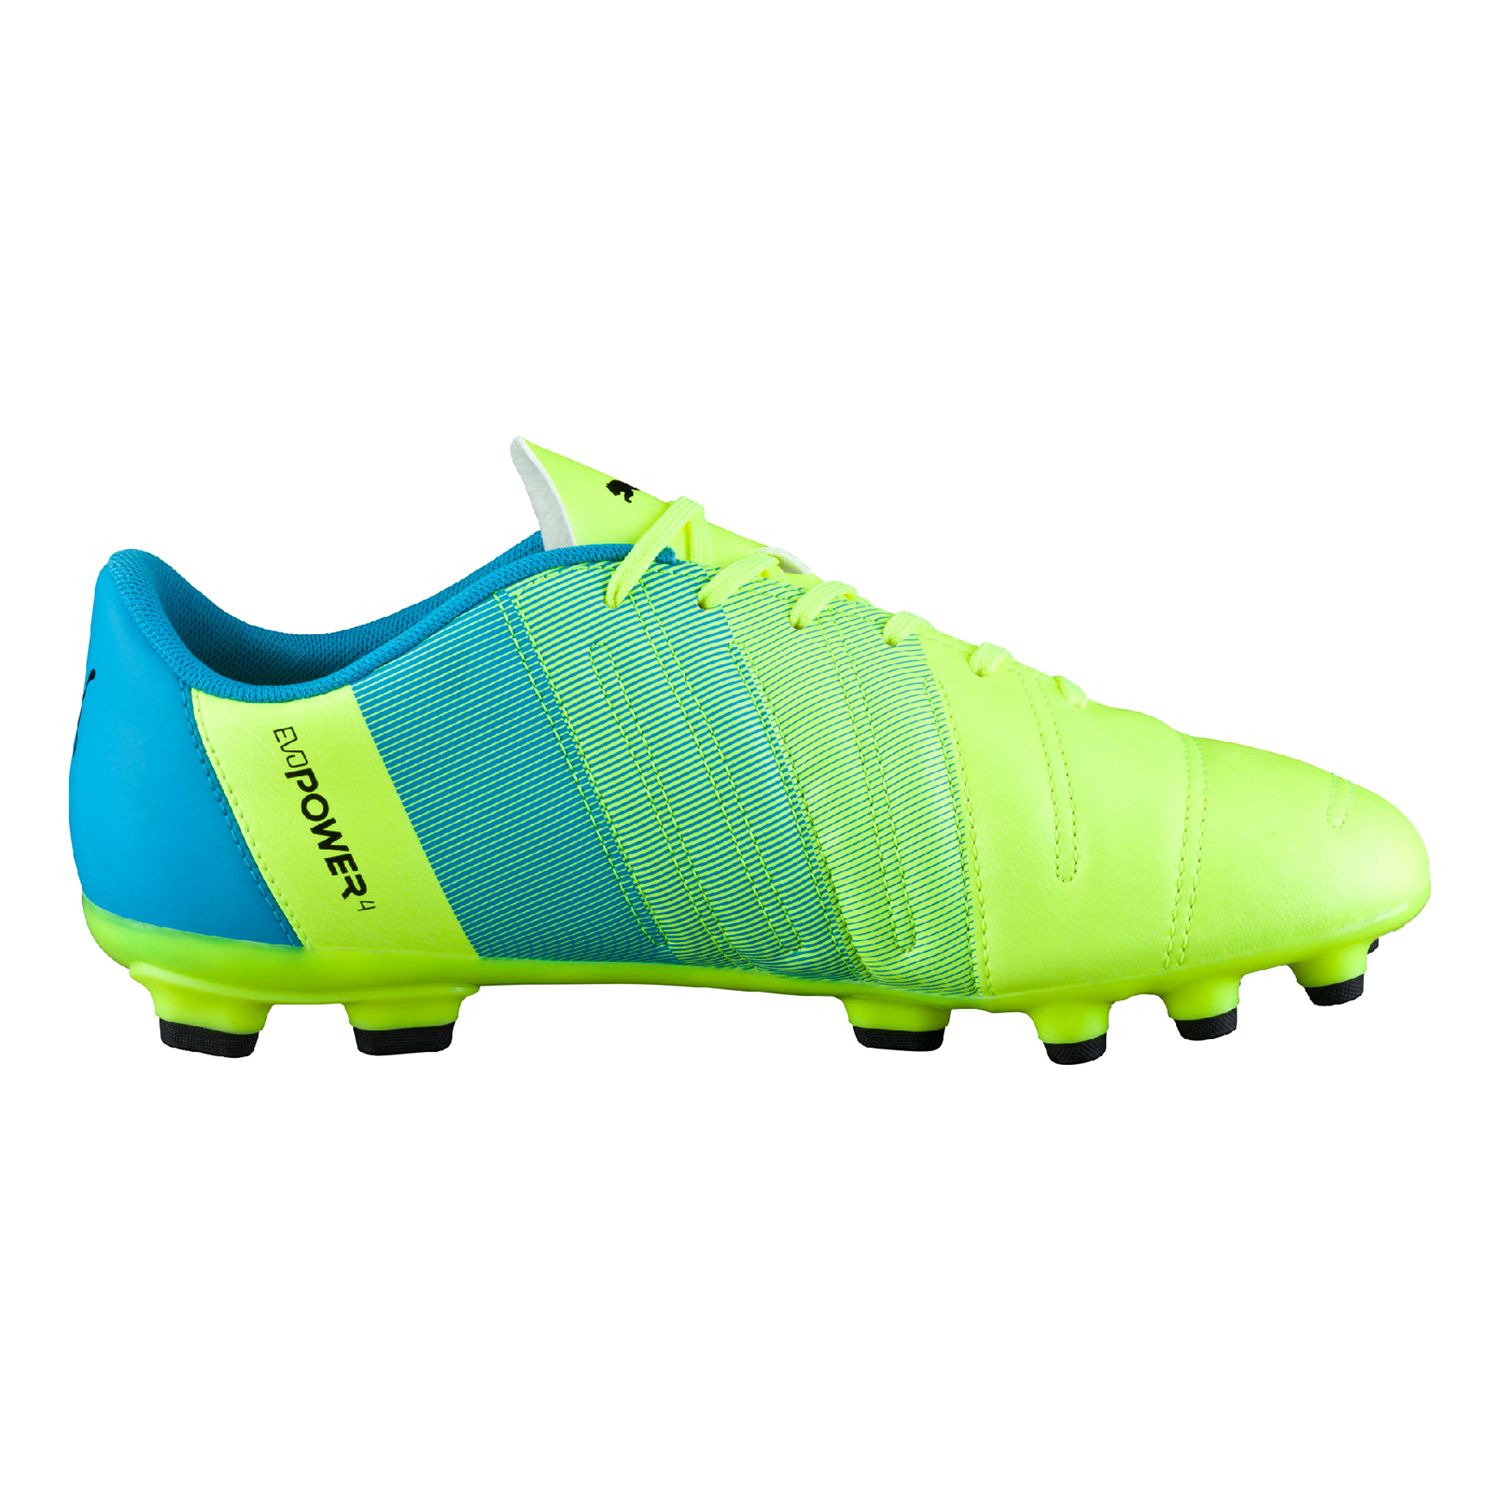 Puma evoPOWER 4.3 AG Football Boots, Yellow/Blue